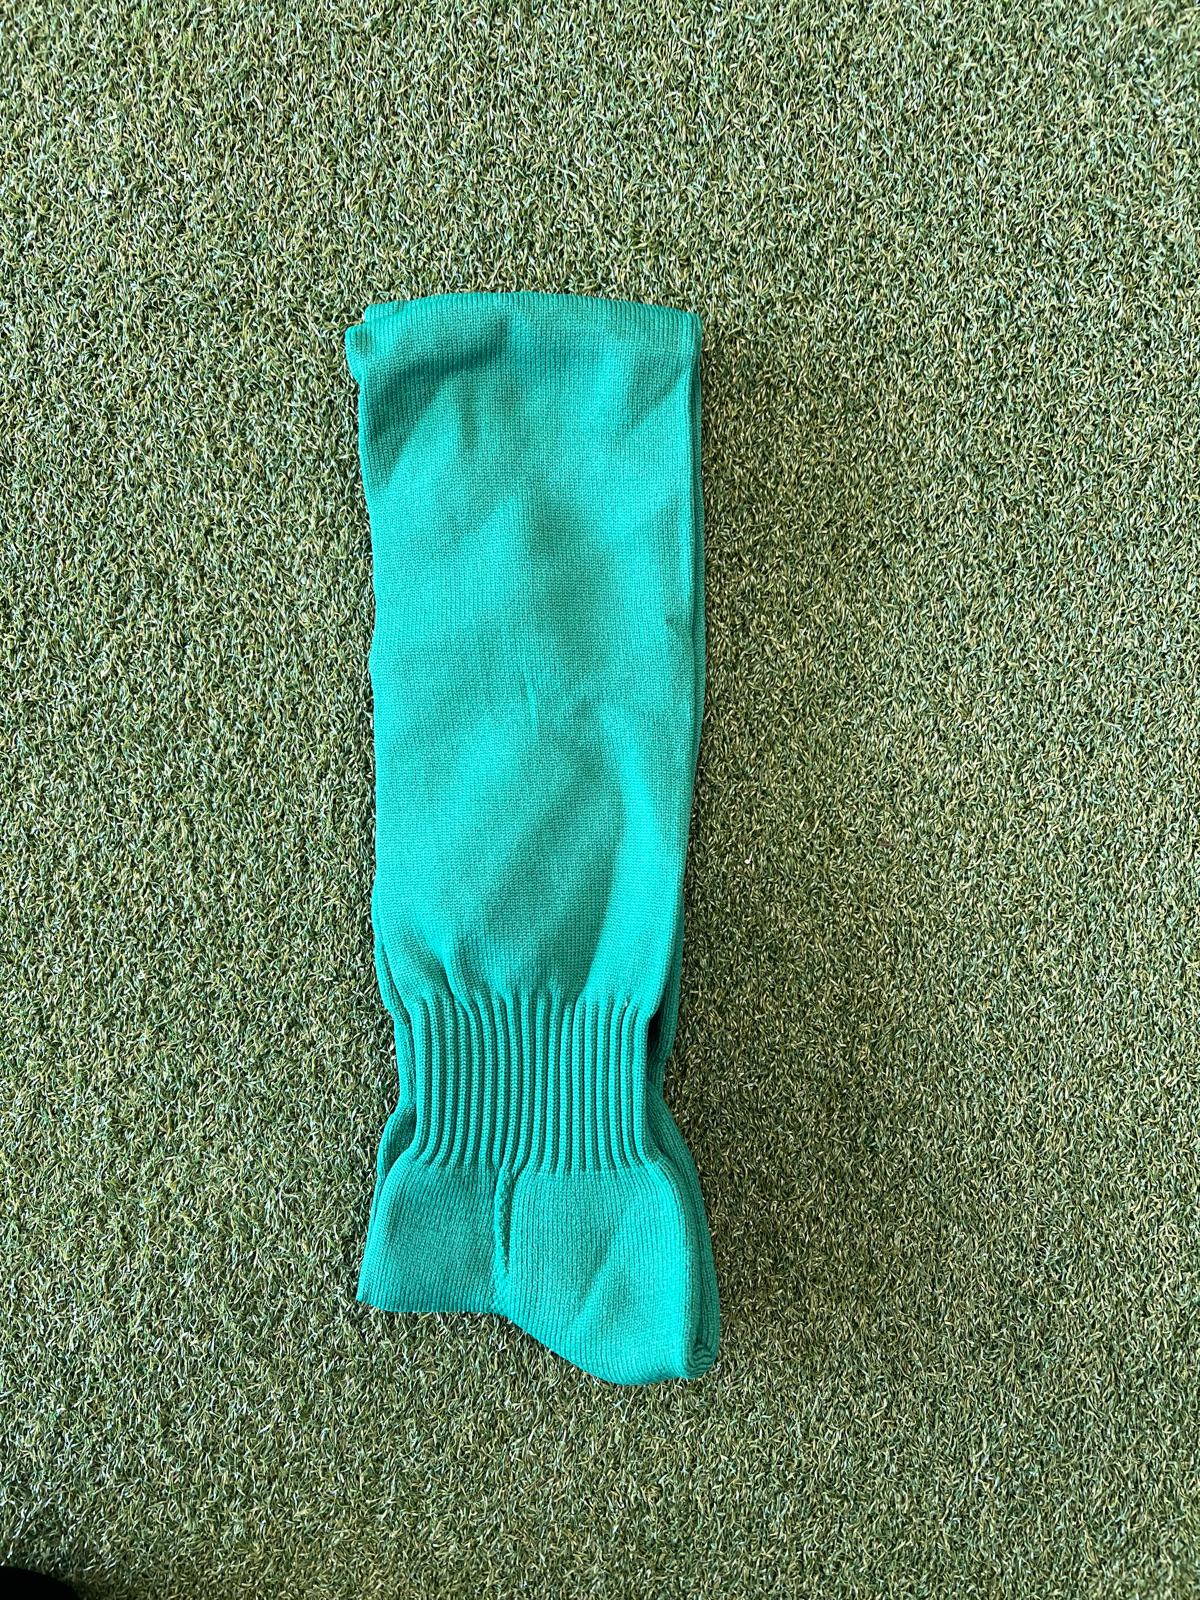 NF Green Football Sock Sock in Adult